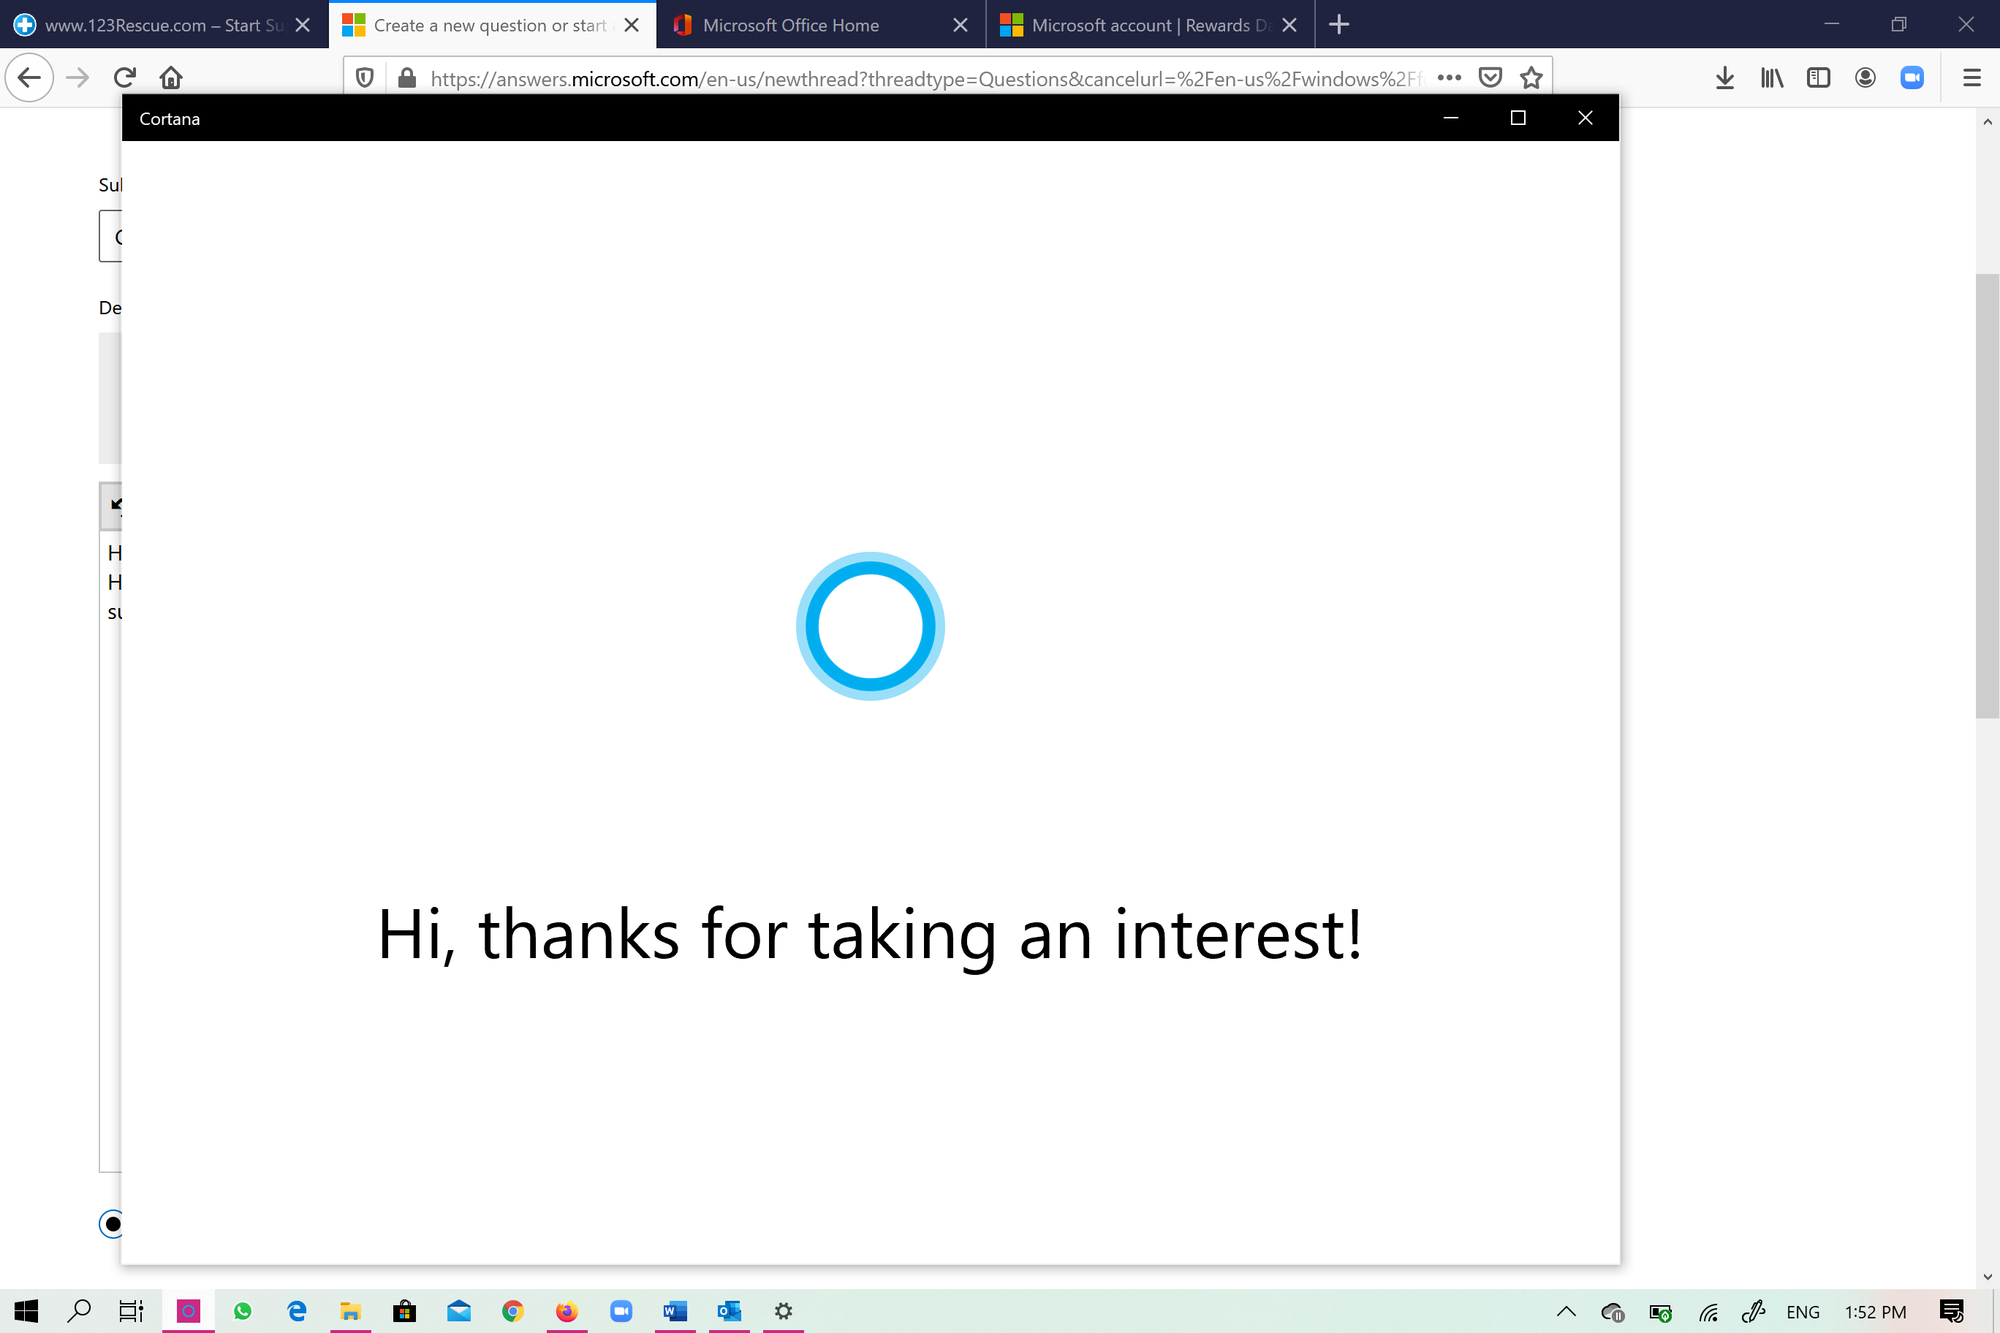 Cortana not working - Hi, thanks for taking an interest! 52f042fd-62b3-4ce8-ad13-d566e902b2a4?upload=true.png